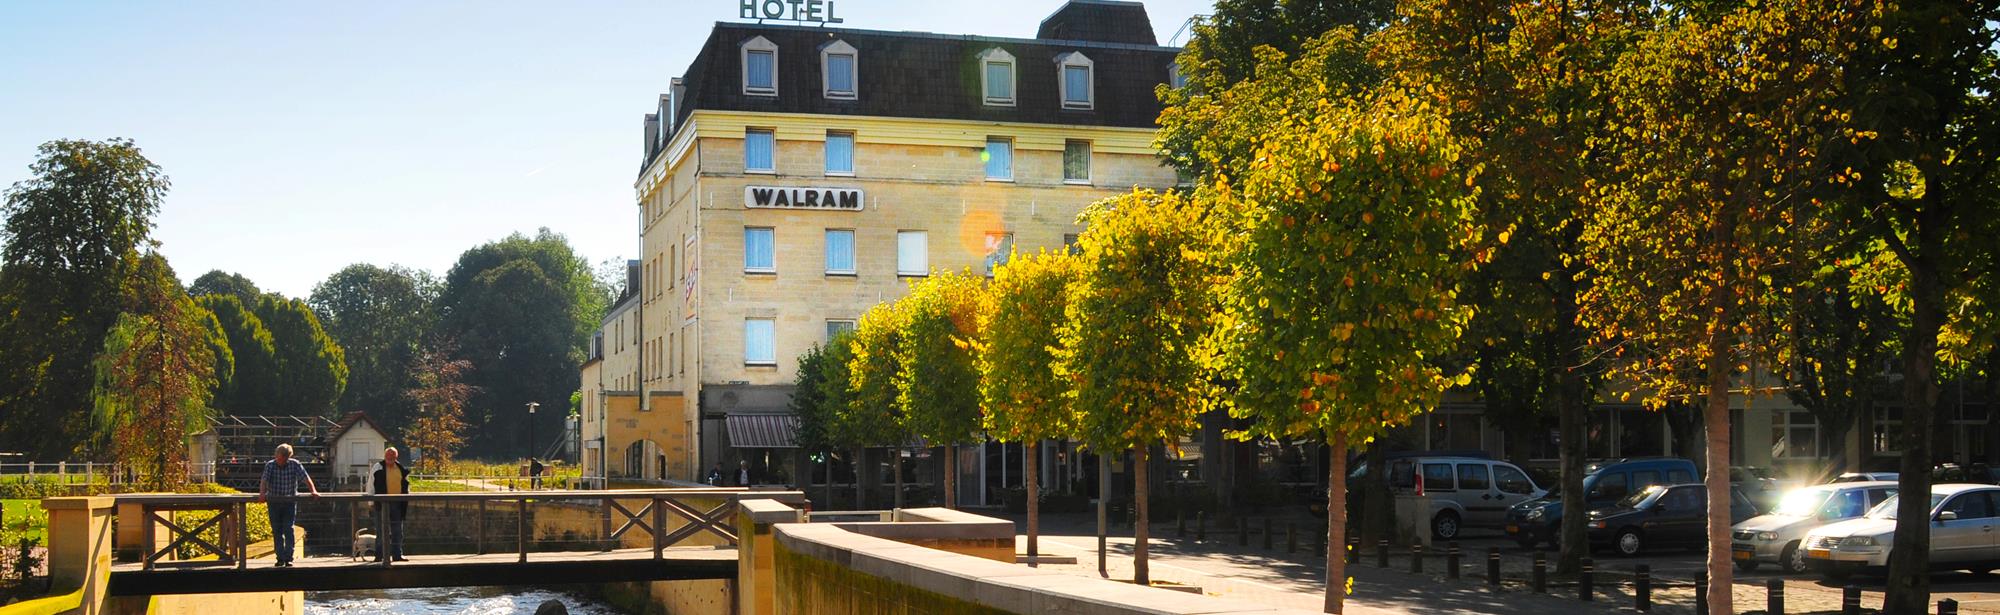 Hotel Walram